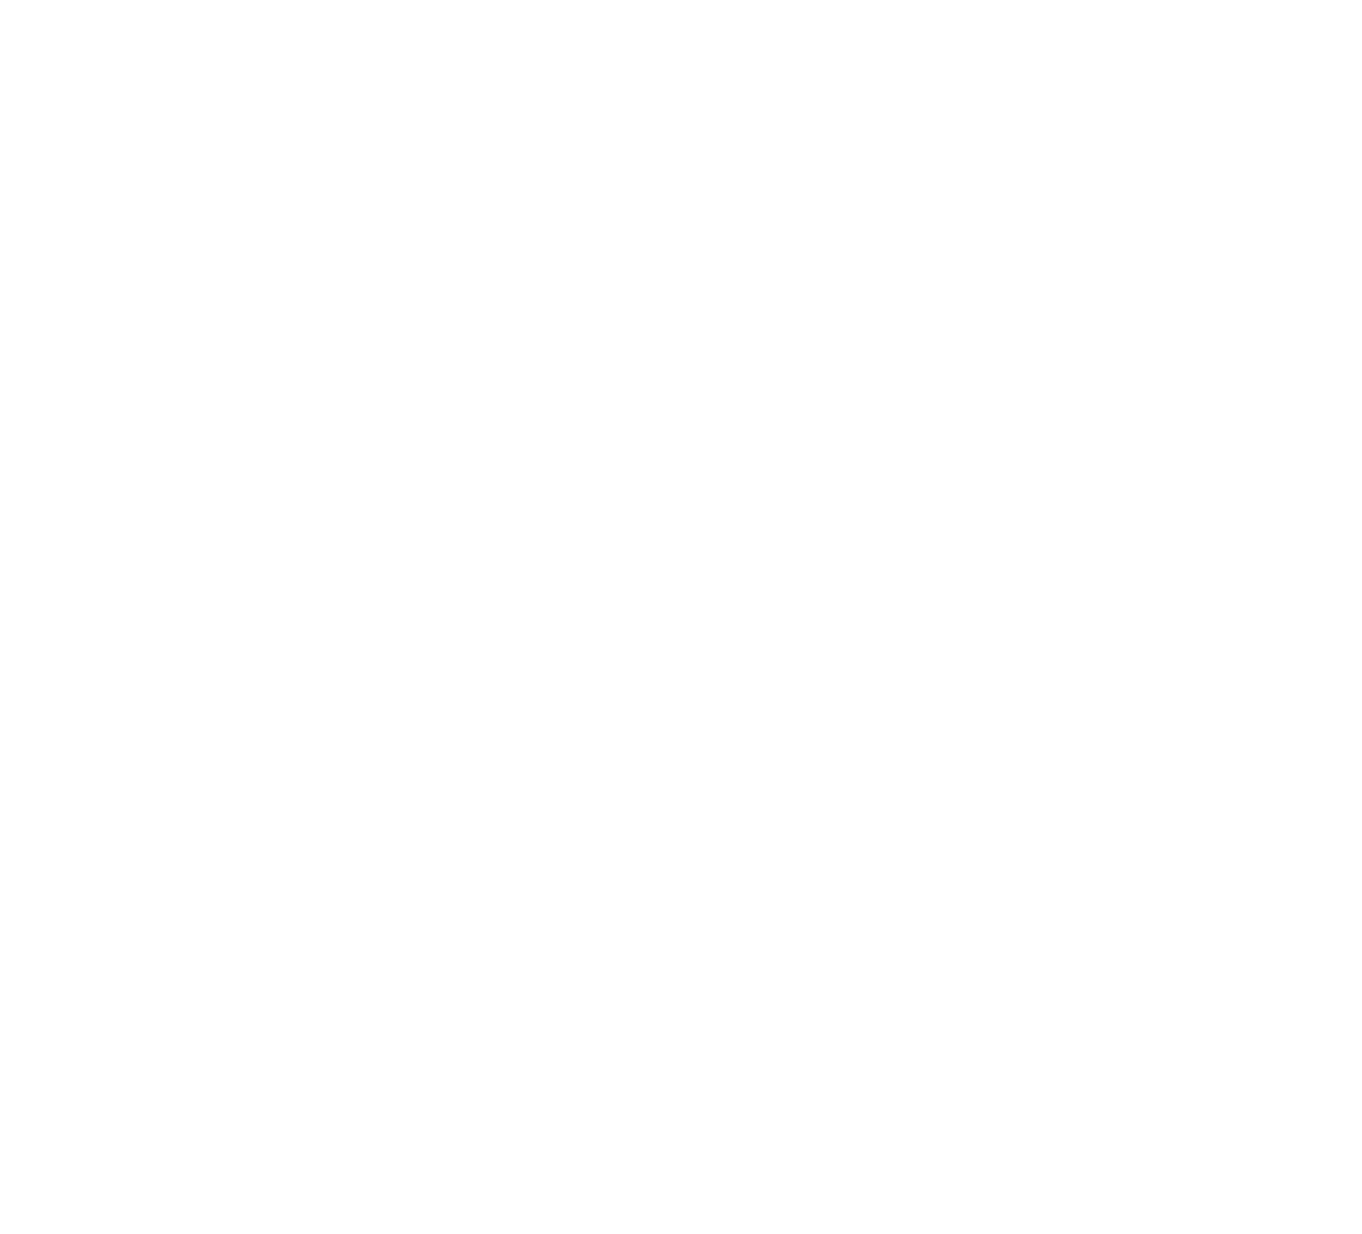 the new u,u